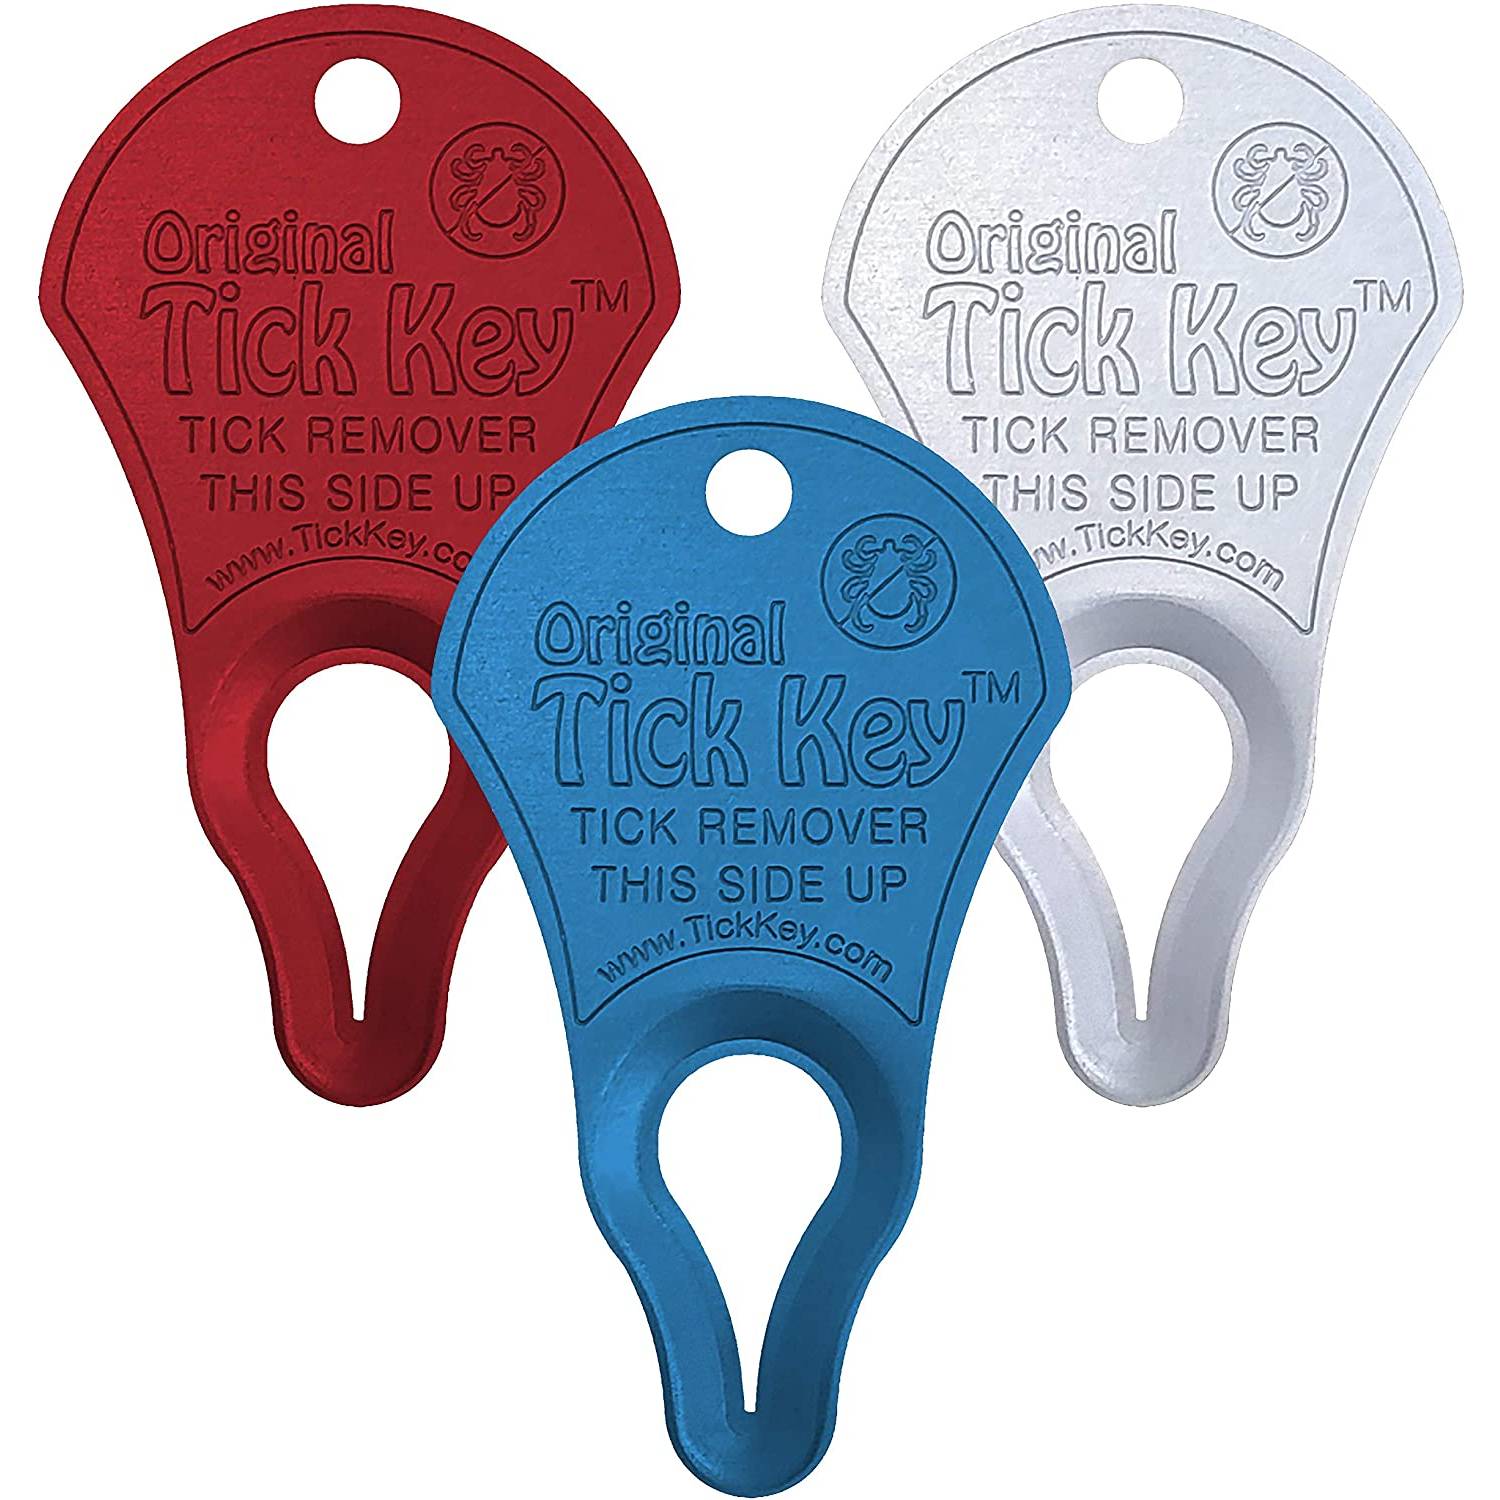 The Tick Key (1)